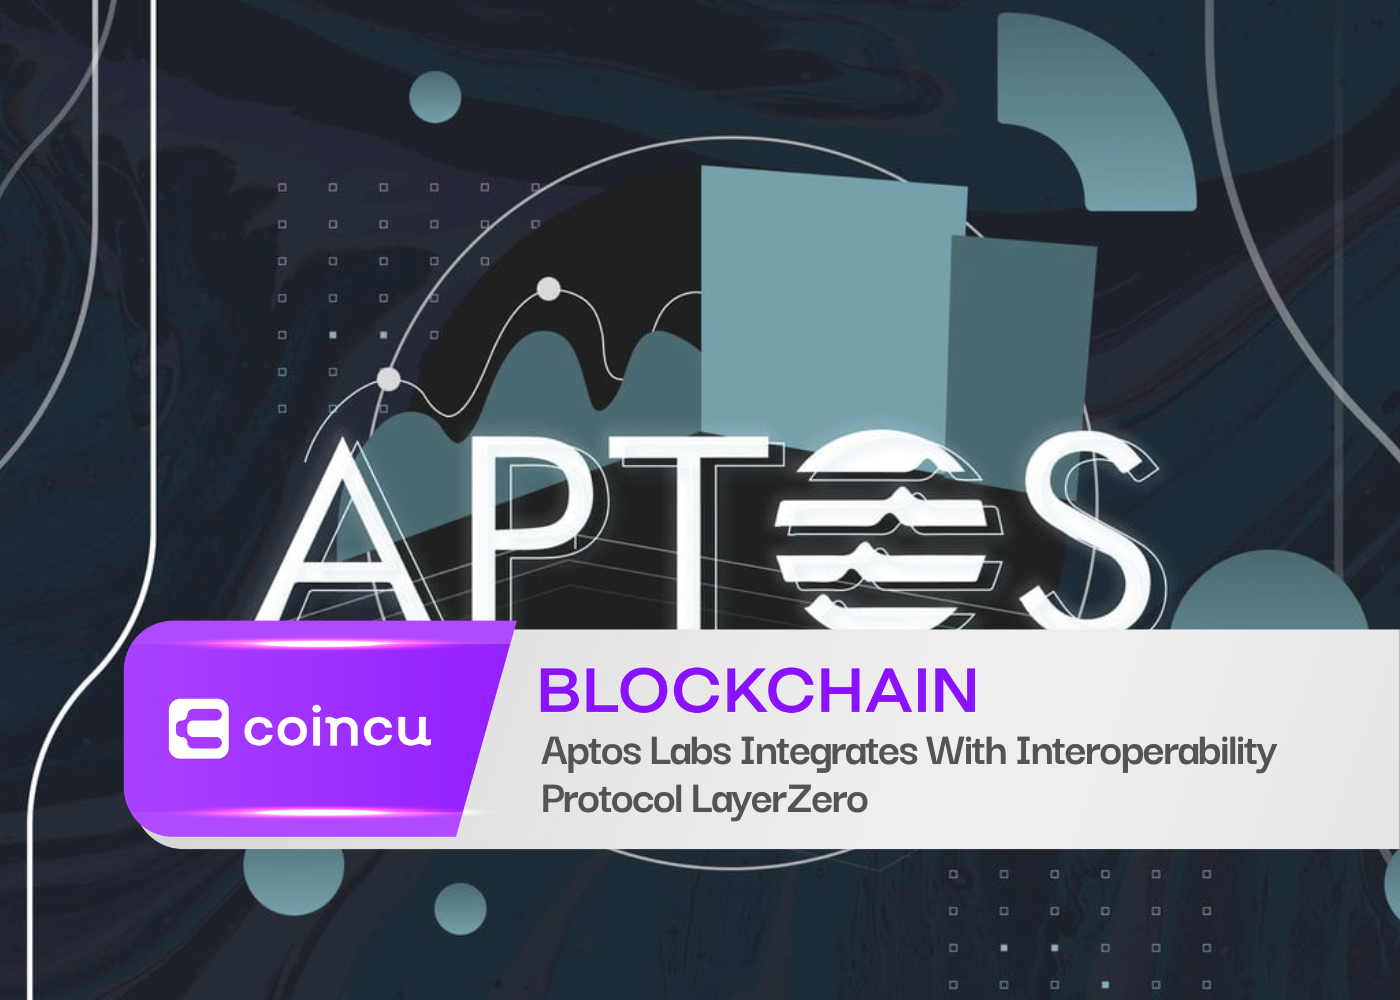 Aptos Labs Integrates With Interoperability Protocol LayerZero